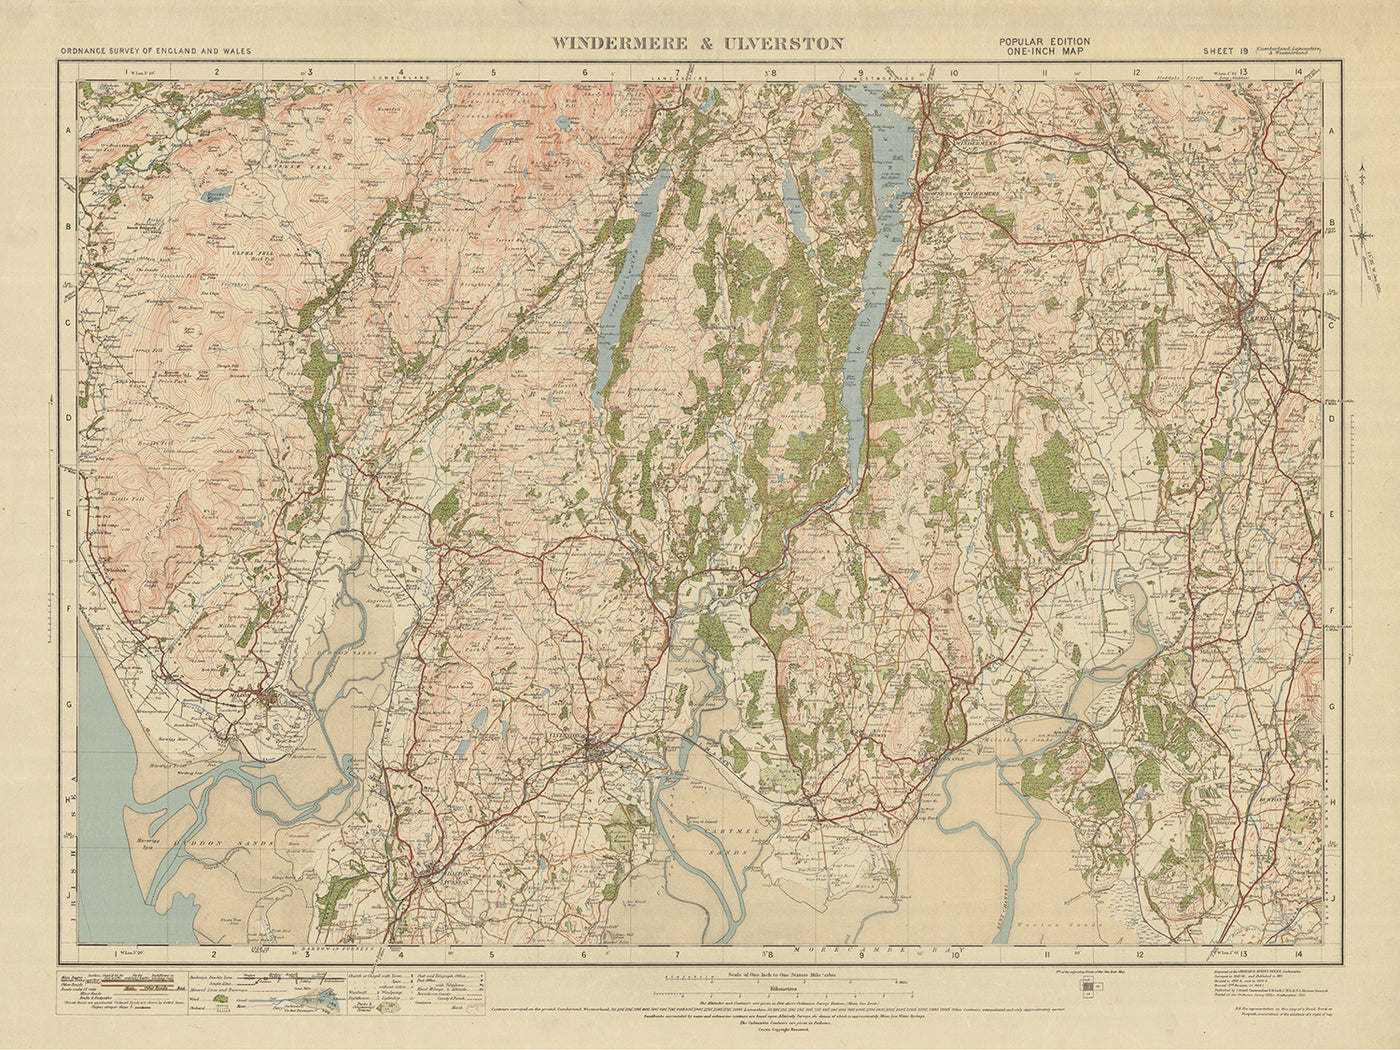 Ancienne carte de l'Ordnance Survey, feuille 19 - Windermere & Ulverston, 1925 : Dalton-in-Furness, Millom, Grange-over-Sands, Kendal et le parc national du Lake District